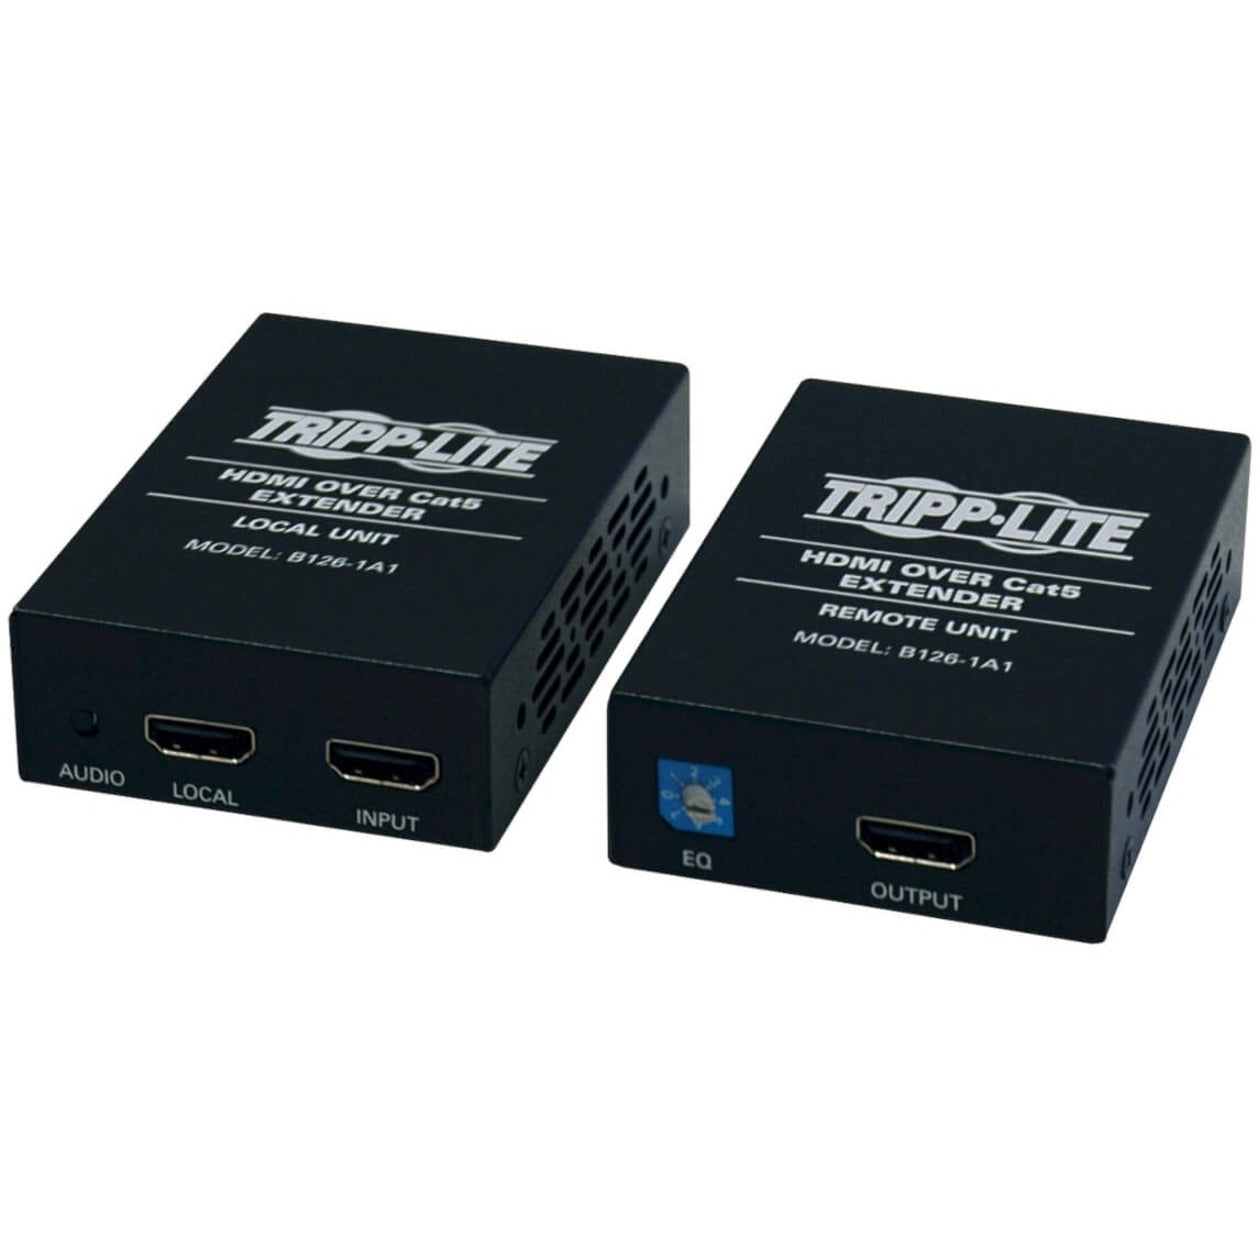 Tripp Lite B126-1A1 Video Extender/Console, HDMI Transmitter/Receiver, 150 ft Range, TAA Compliant